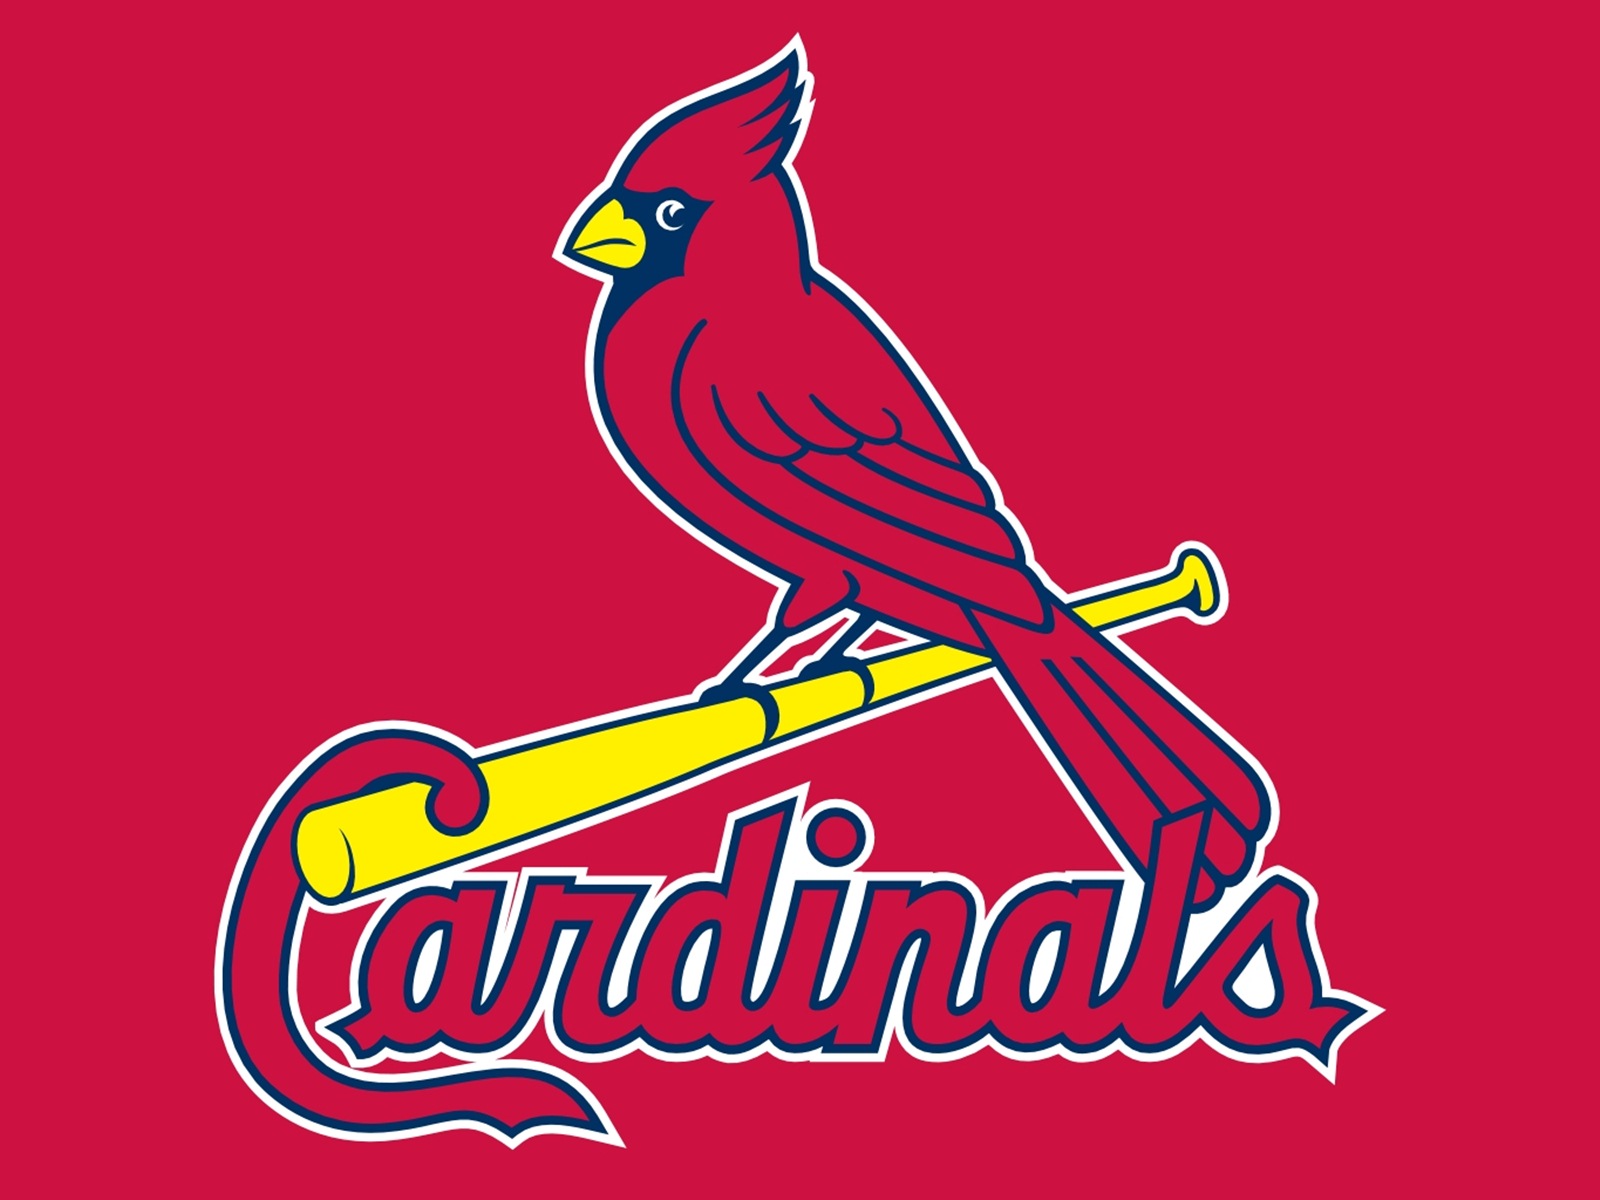 Free St Louis Cardinals Vector Logo, Download Free St Louis Cardinals Vector Logo png images